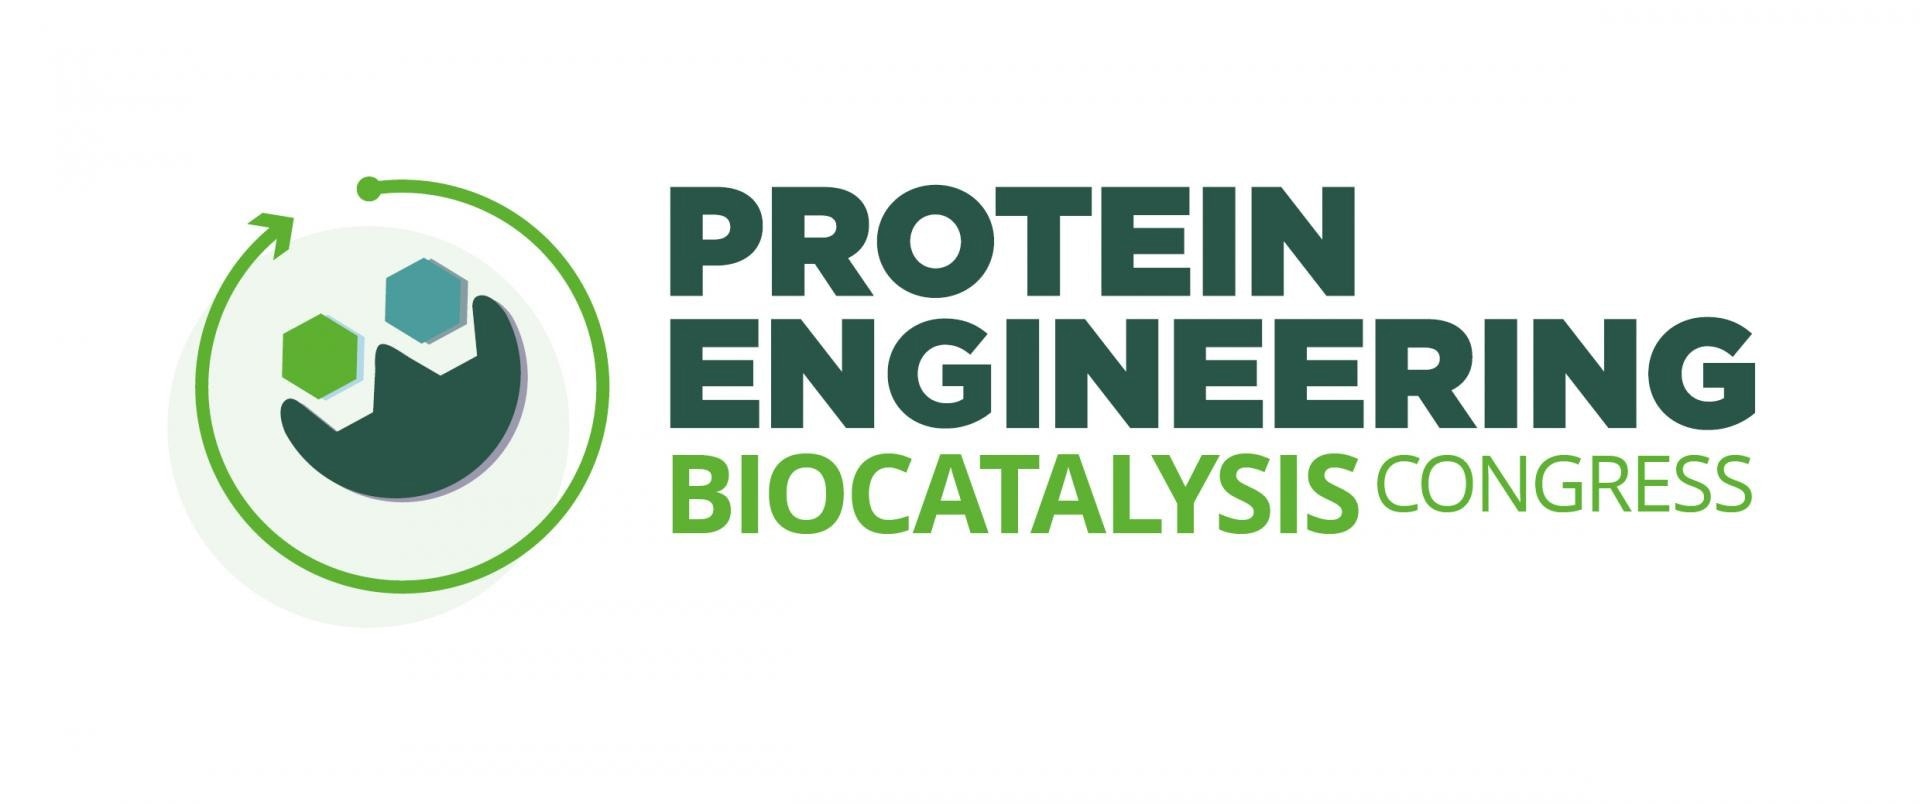 Kisaco Research: Protein Engineering Biocatalysis Congress